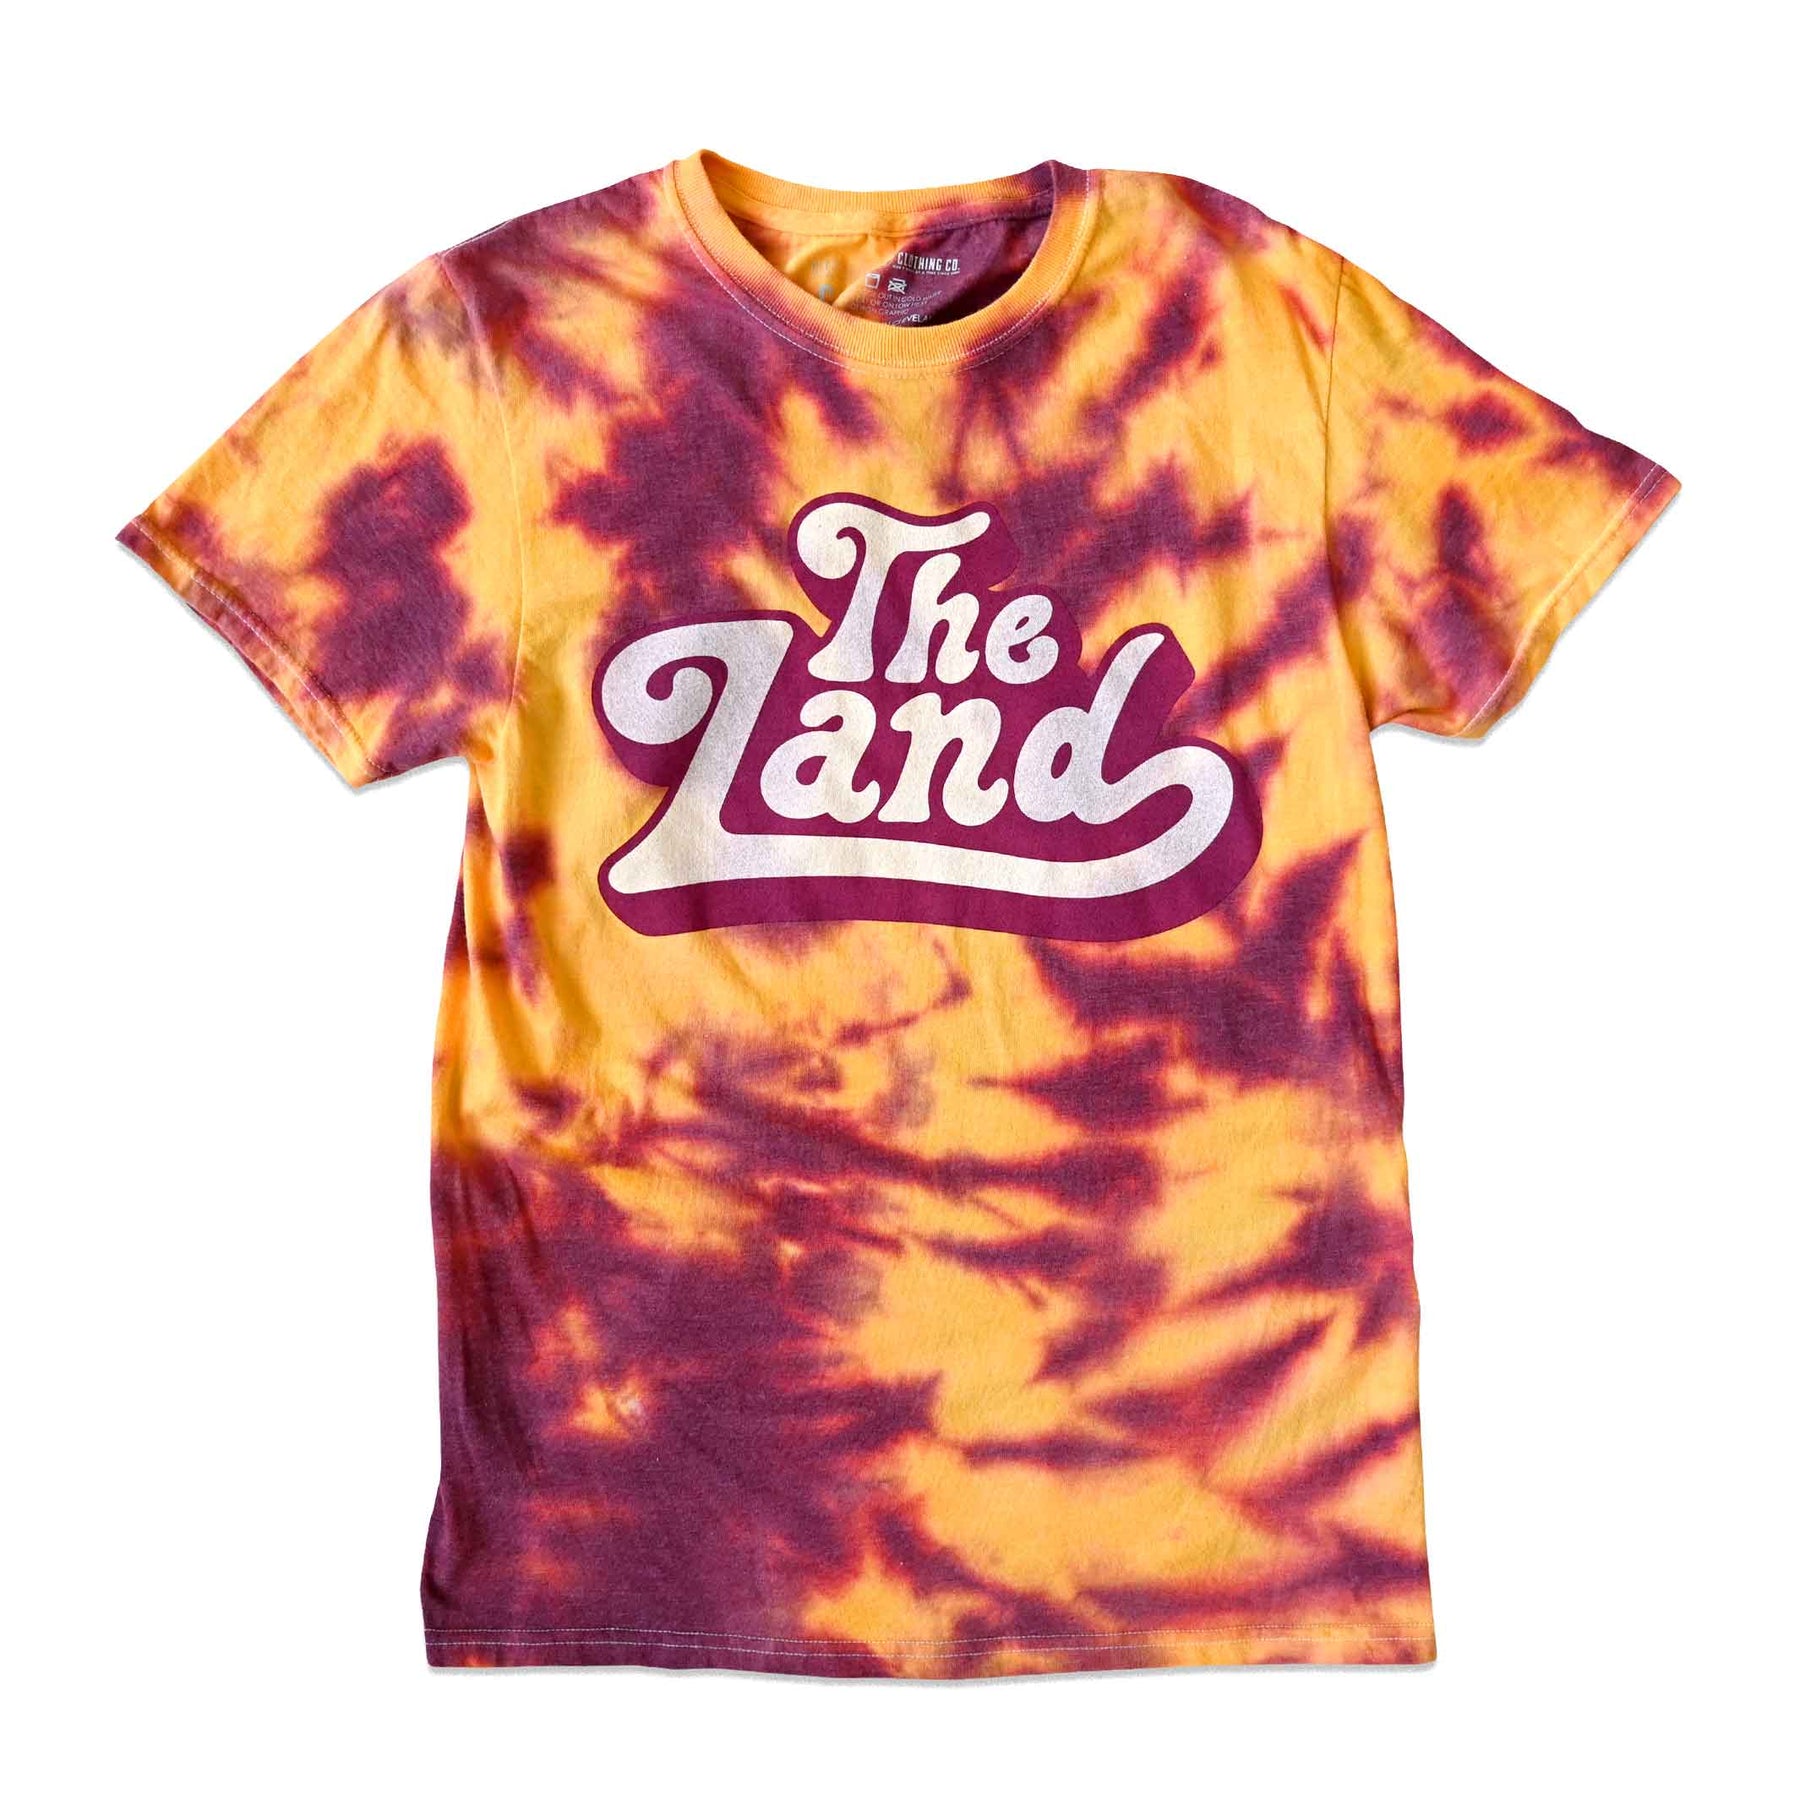 The Land Groovy - Wine/Gold Tie Dye Unisex Crew T-Shirt